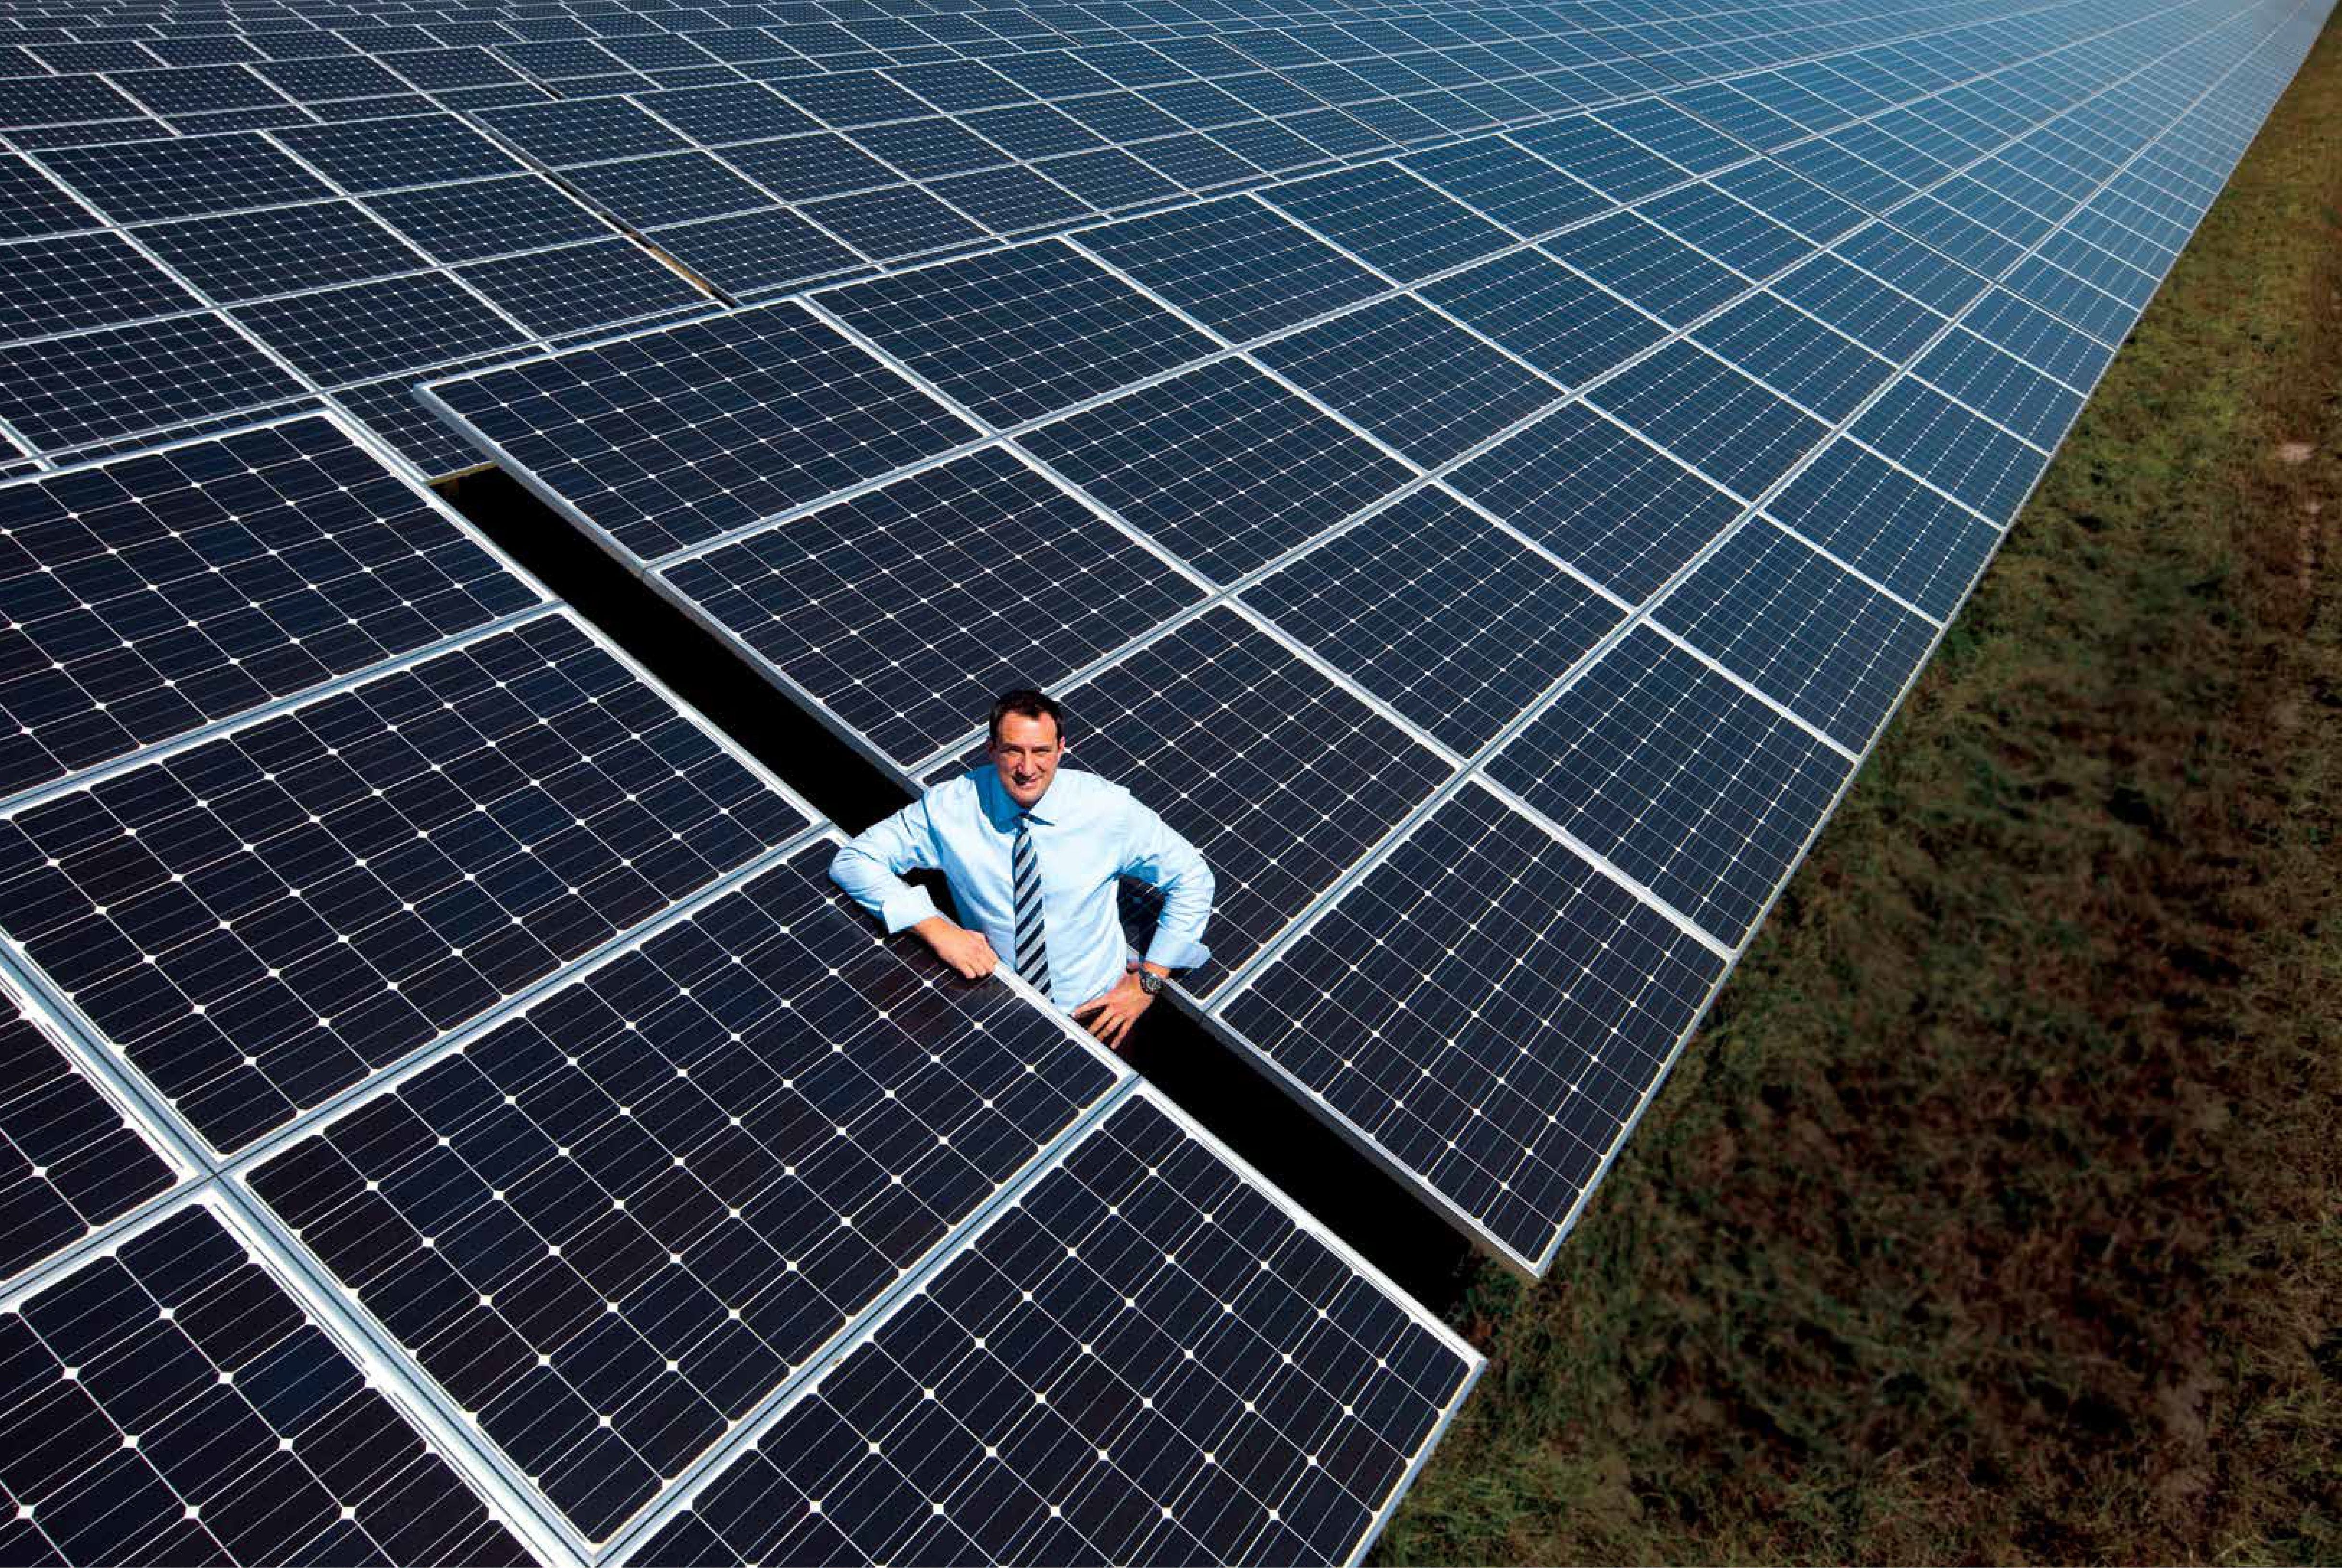 The Australian solar entrepreneur who conquered the US